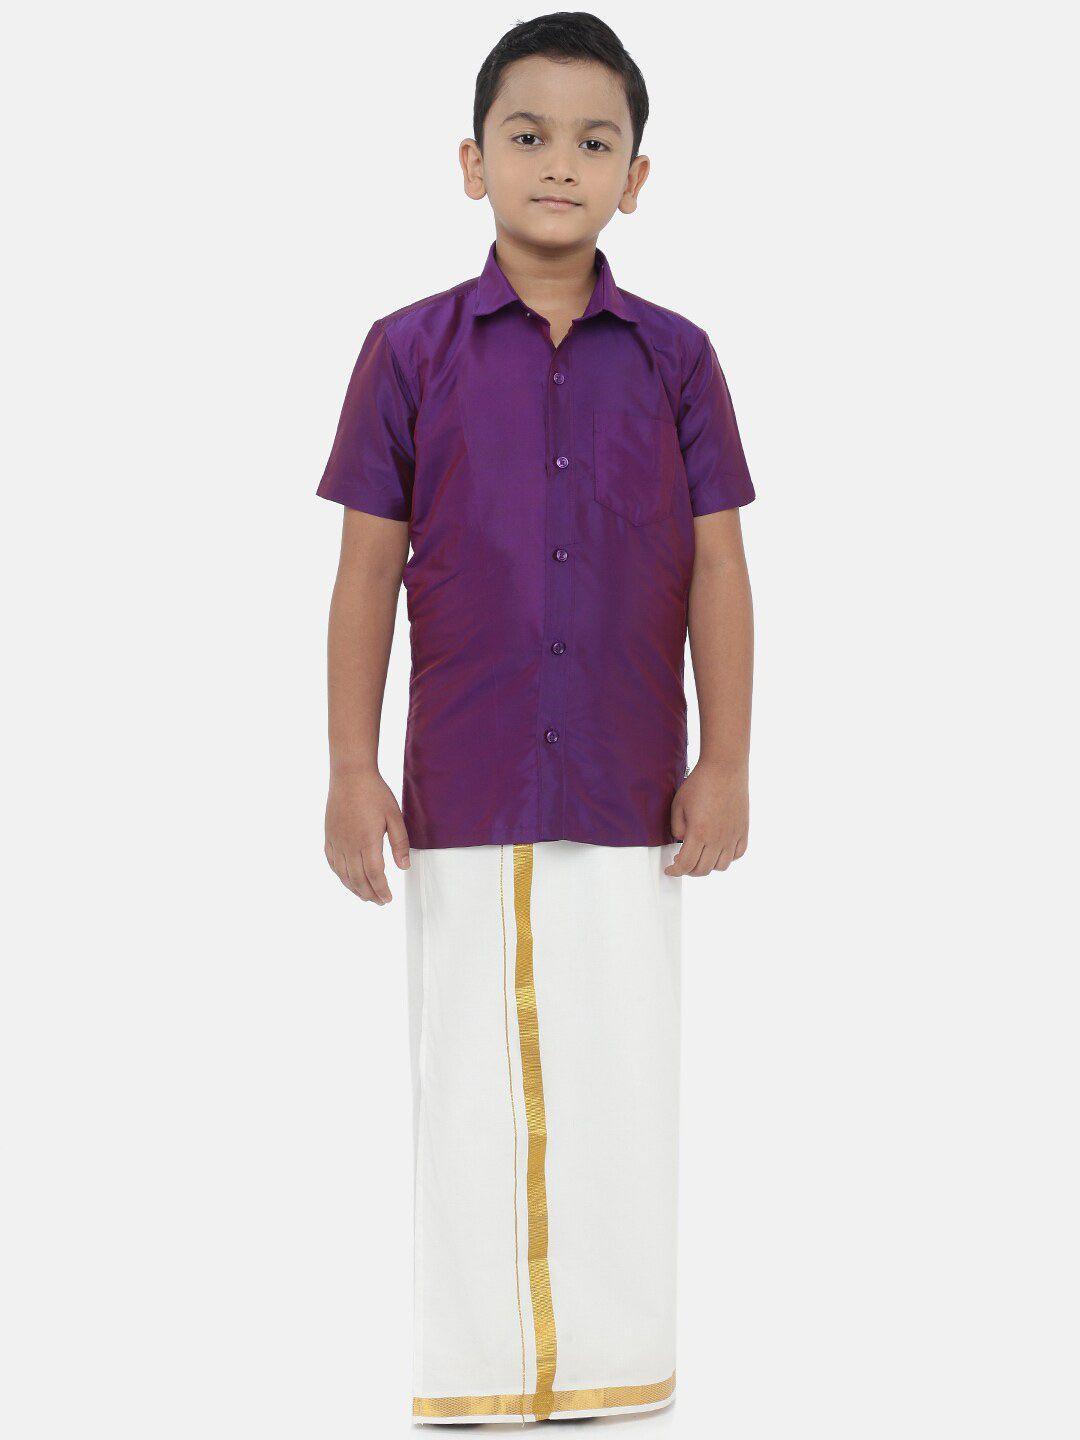 littlestars boys purple & white shirt with dhotis